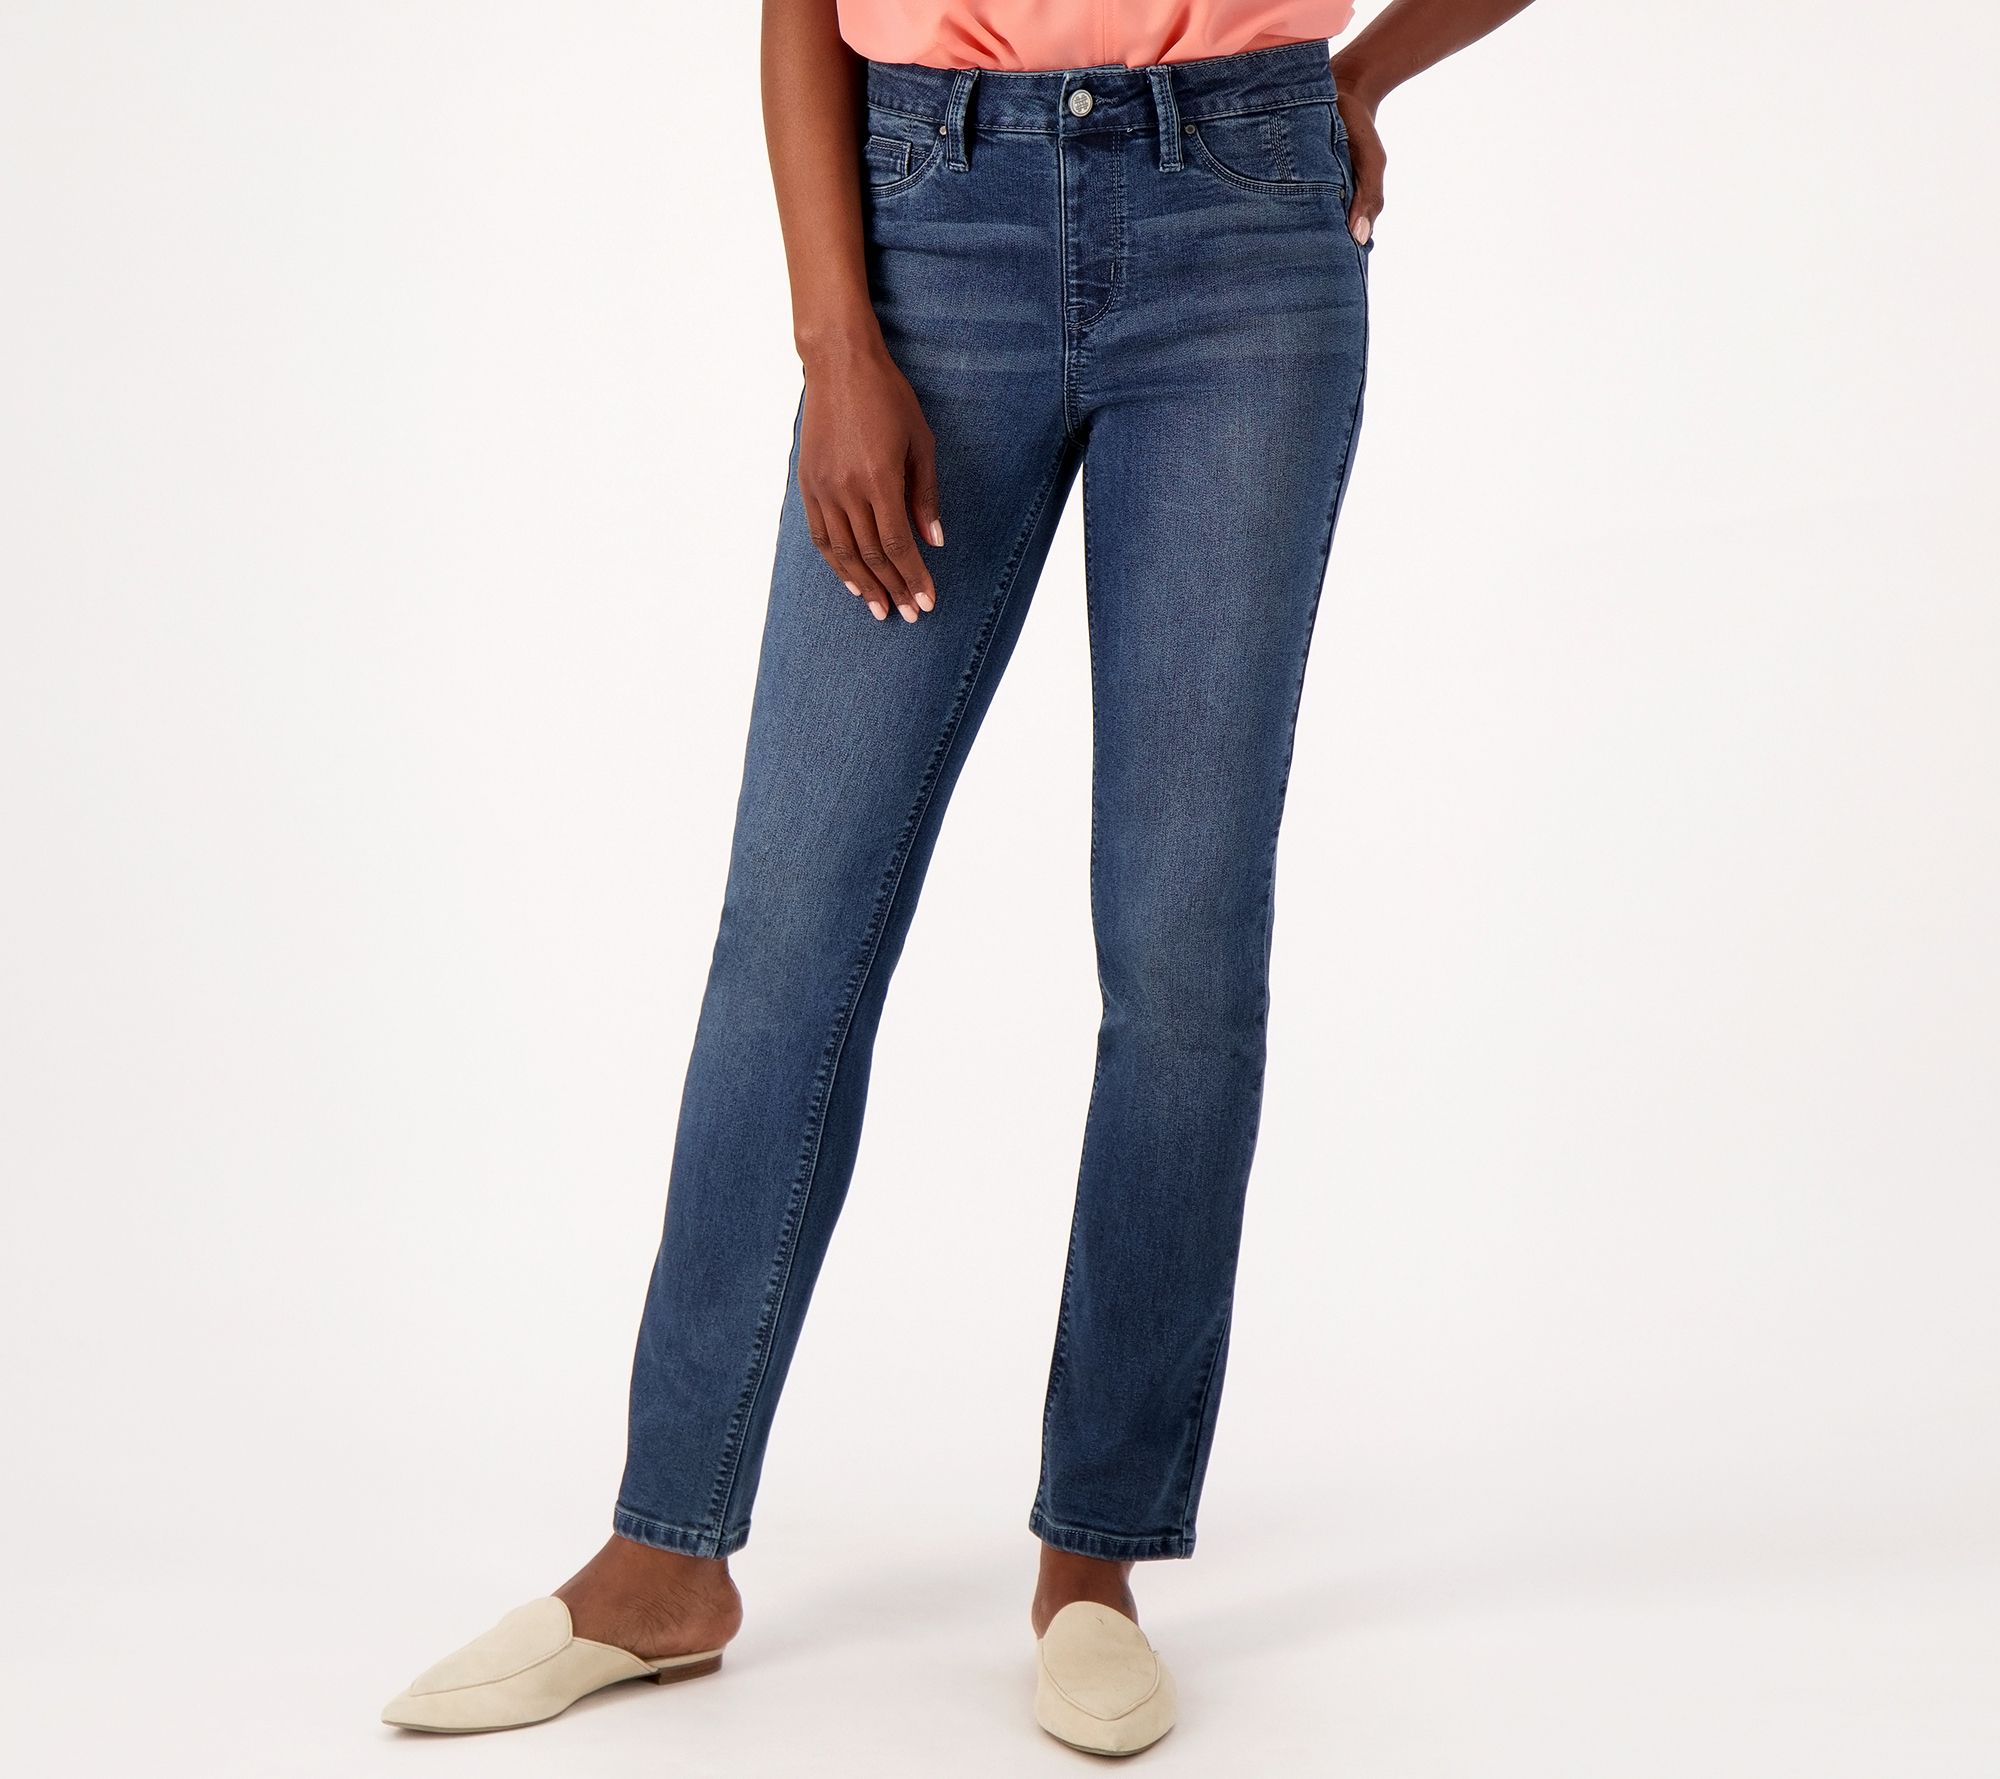 Laurie Felt Tall Silky Denim Easy Skinny Pull-On Jeans - QVC.com